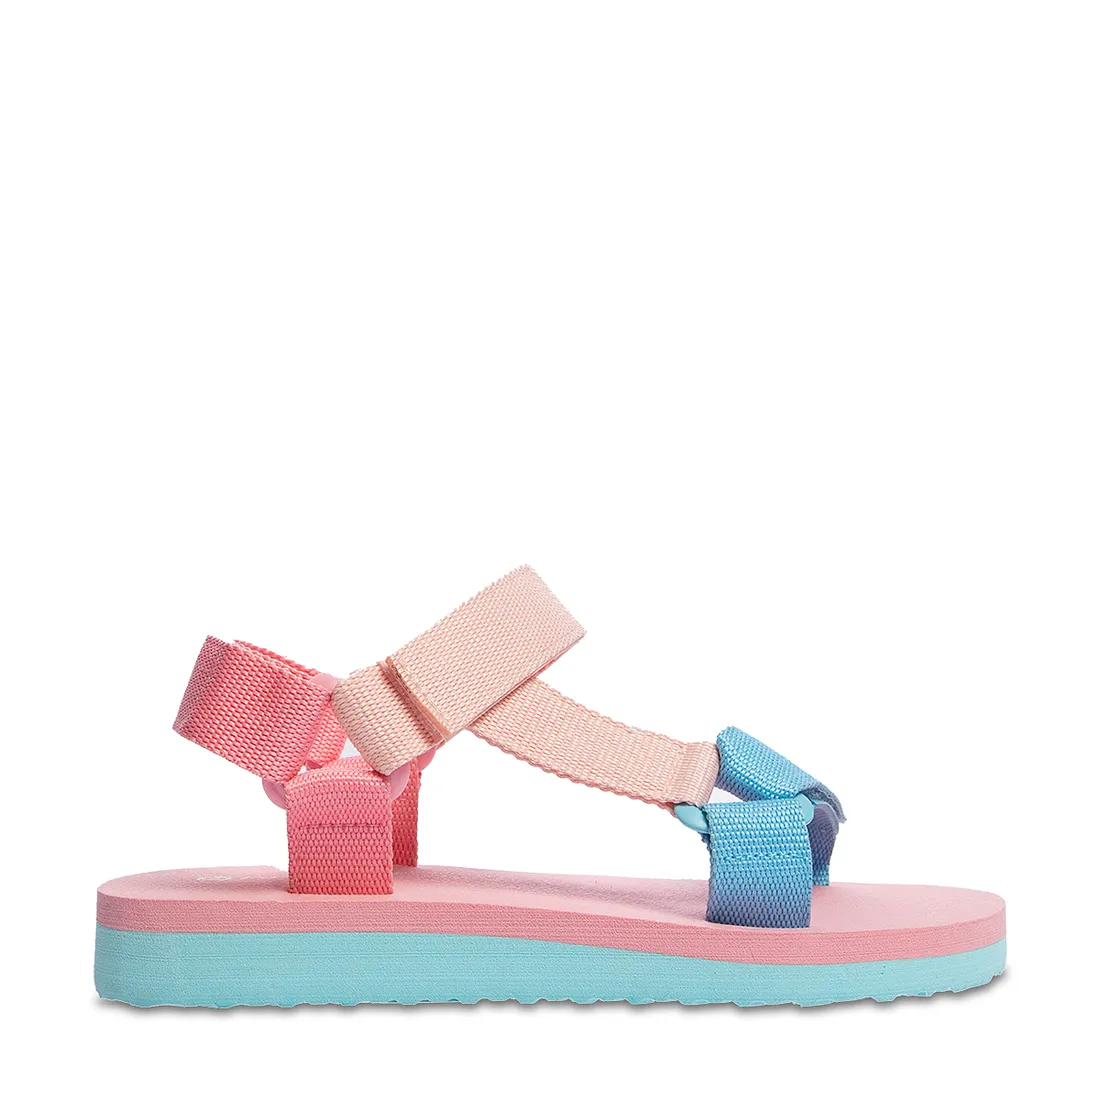 Colour block sport sandal pink & blue - GIRLS 7-15 YEARS Shoes | Ackermans